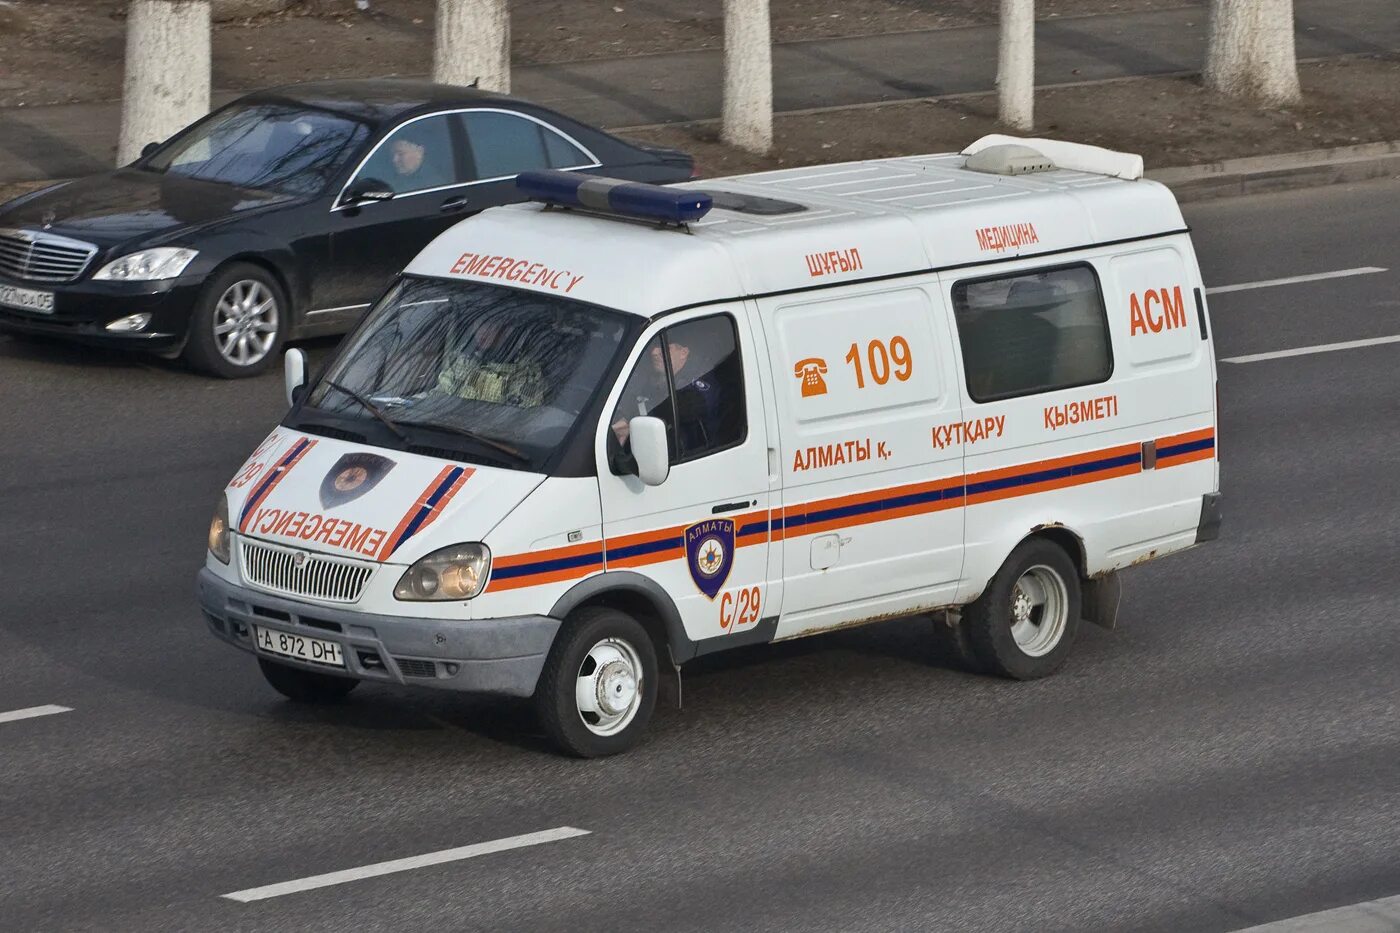 АСМ-41-02 на базе ГАЗ-27057. Аварийно-спасательная машина АСМ-41-02-27057. АСМ-41-02 базовое шасси ГАЗ-27057. Аварийно-спасательная машина АСМ-41-02 на базе автомобиля ГАЗ-27057. Спасательный автомобиль мчс